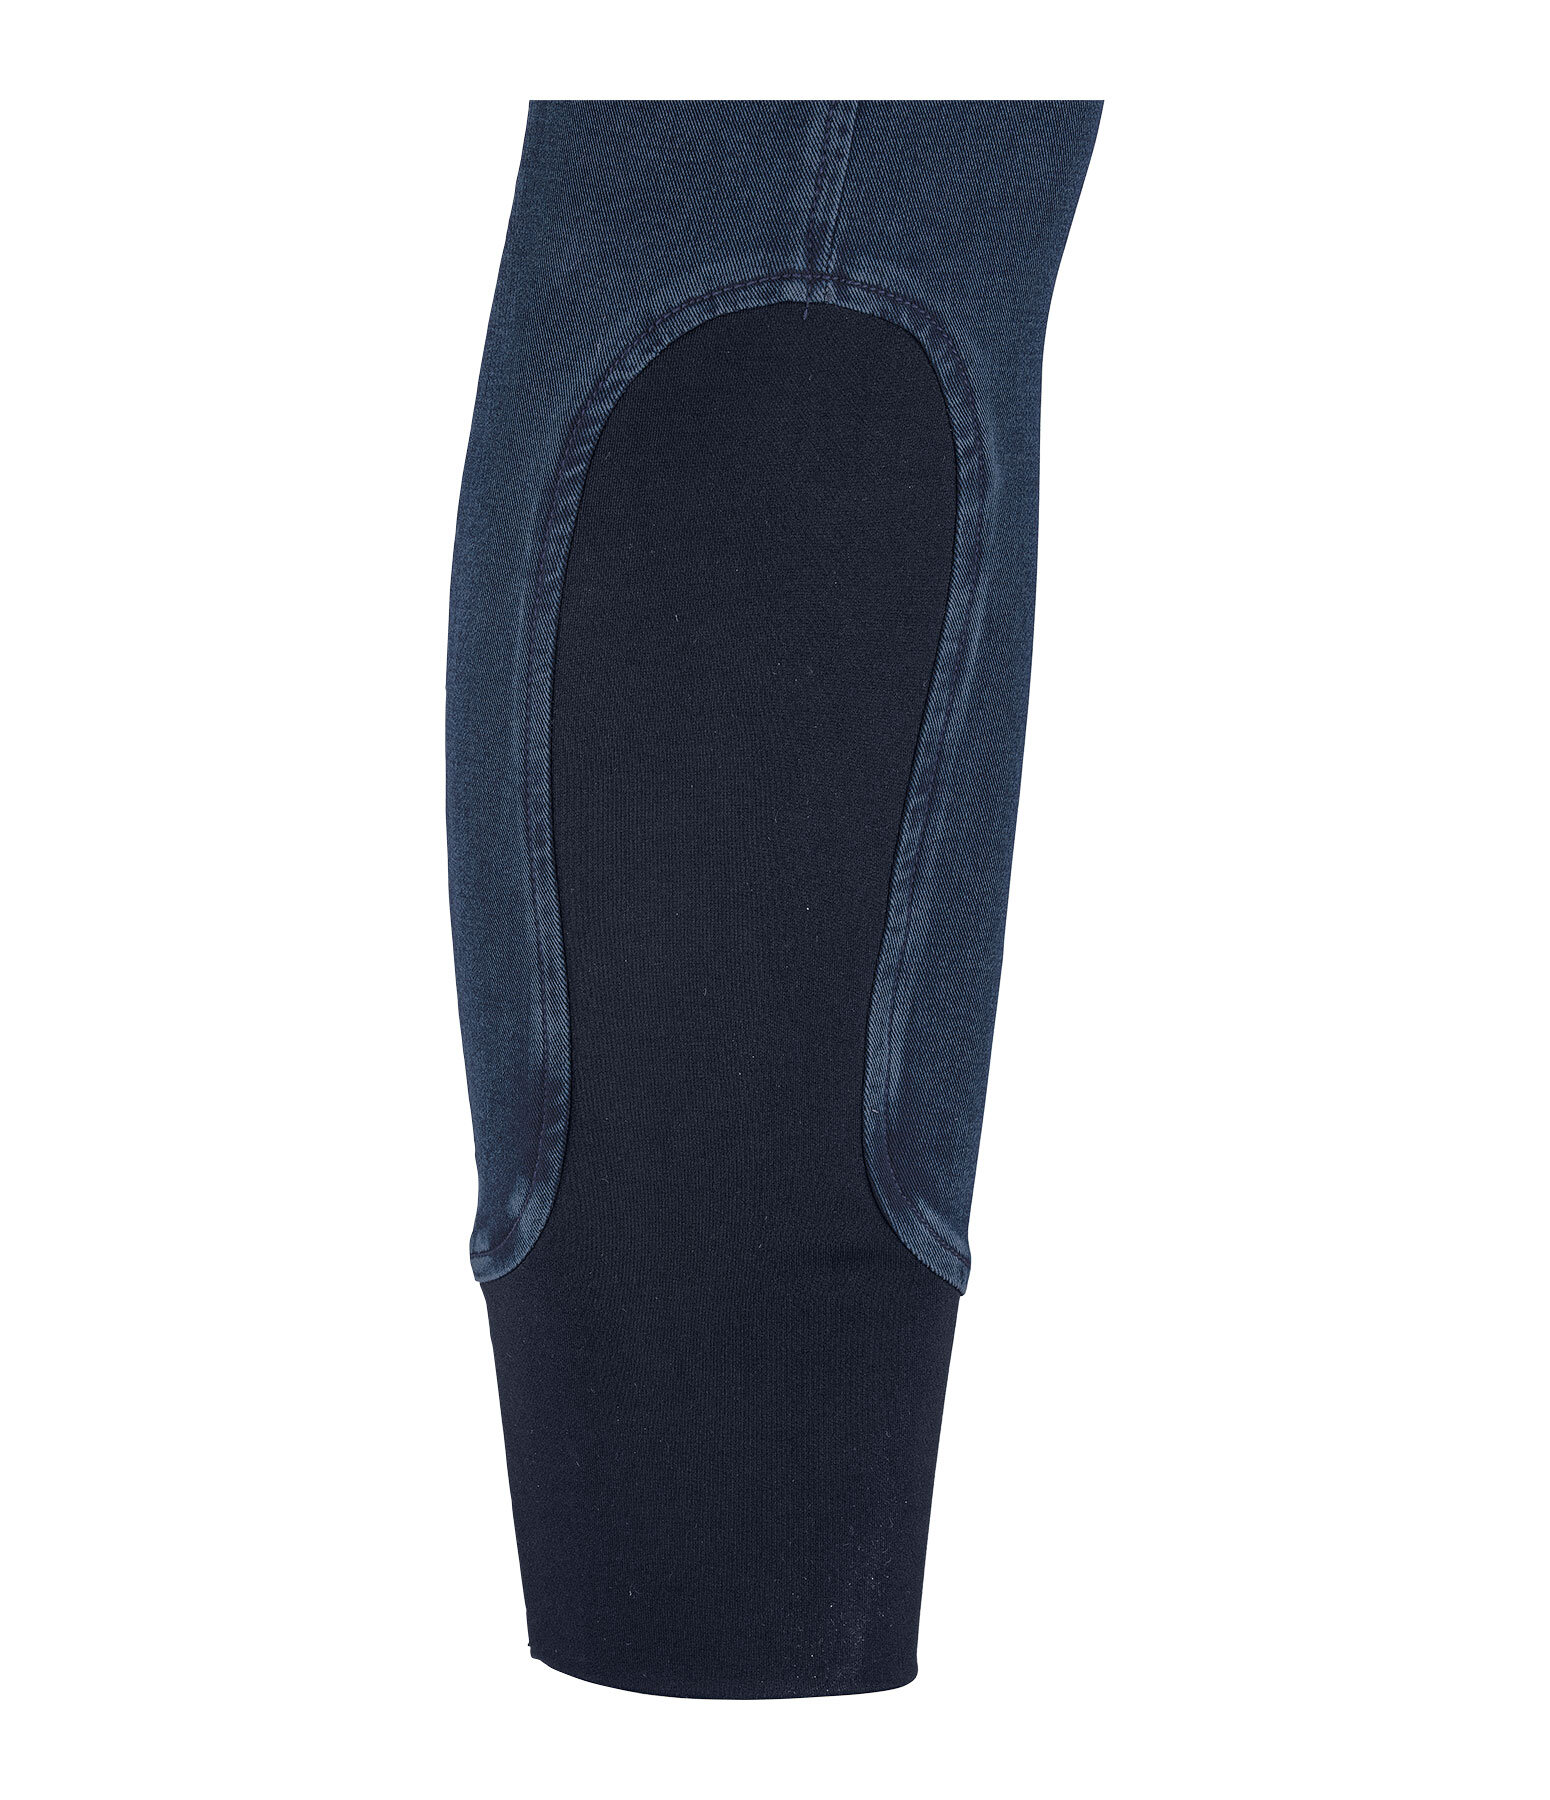 Men's Grip Full-Seat Jeans Breeches San Francisco